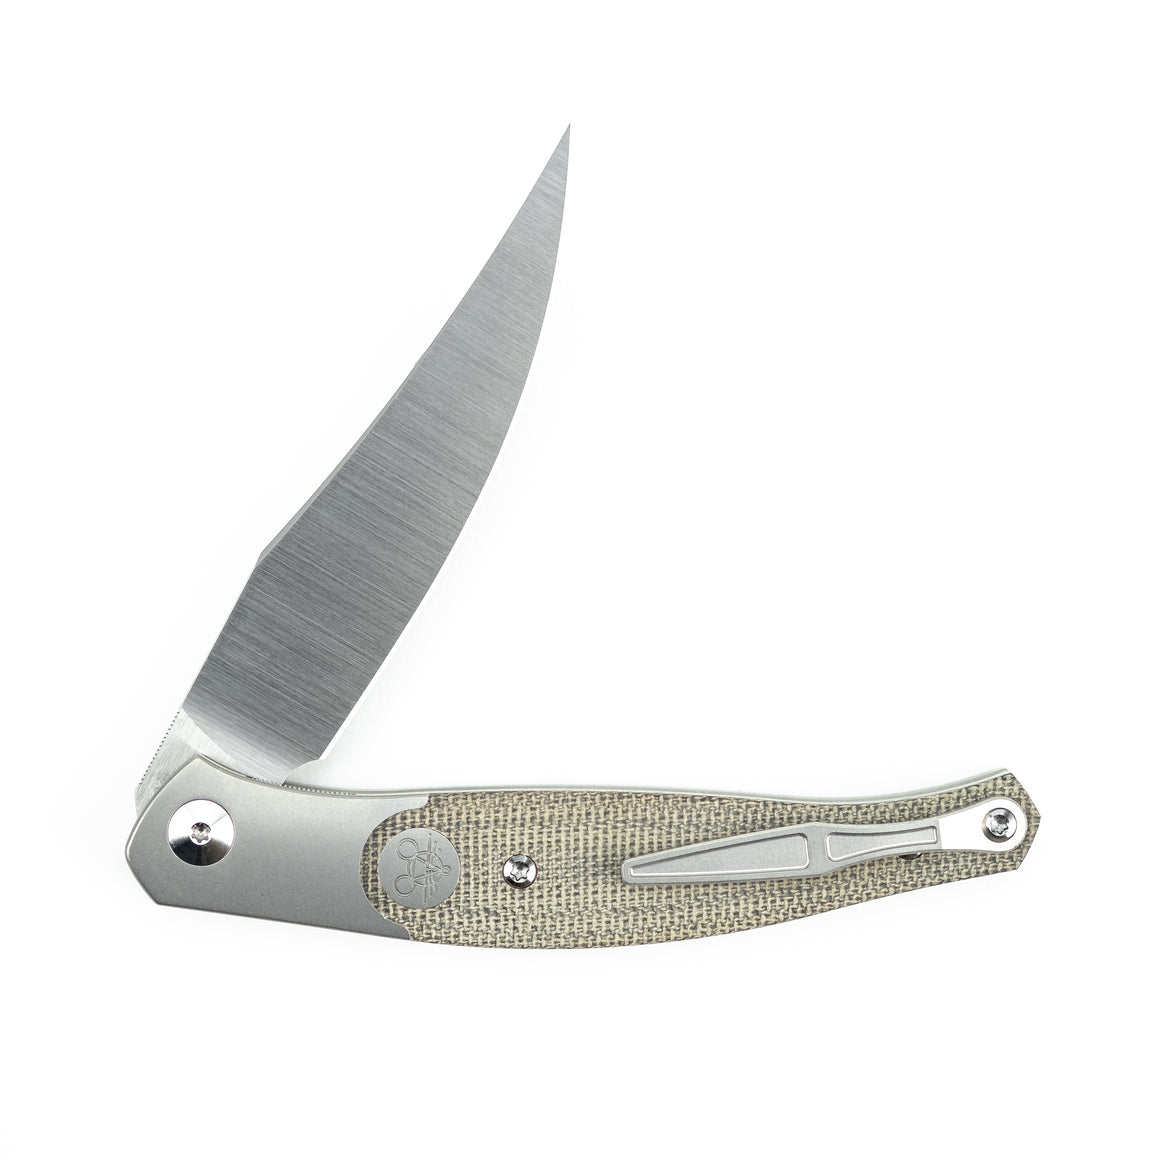 GiantMouse GM7 - EDC knife - Green Canvas Micarta Handle - Stainless Steel. Satin Finish Blade